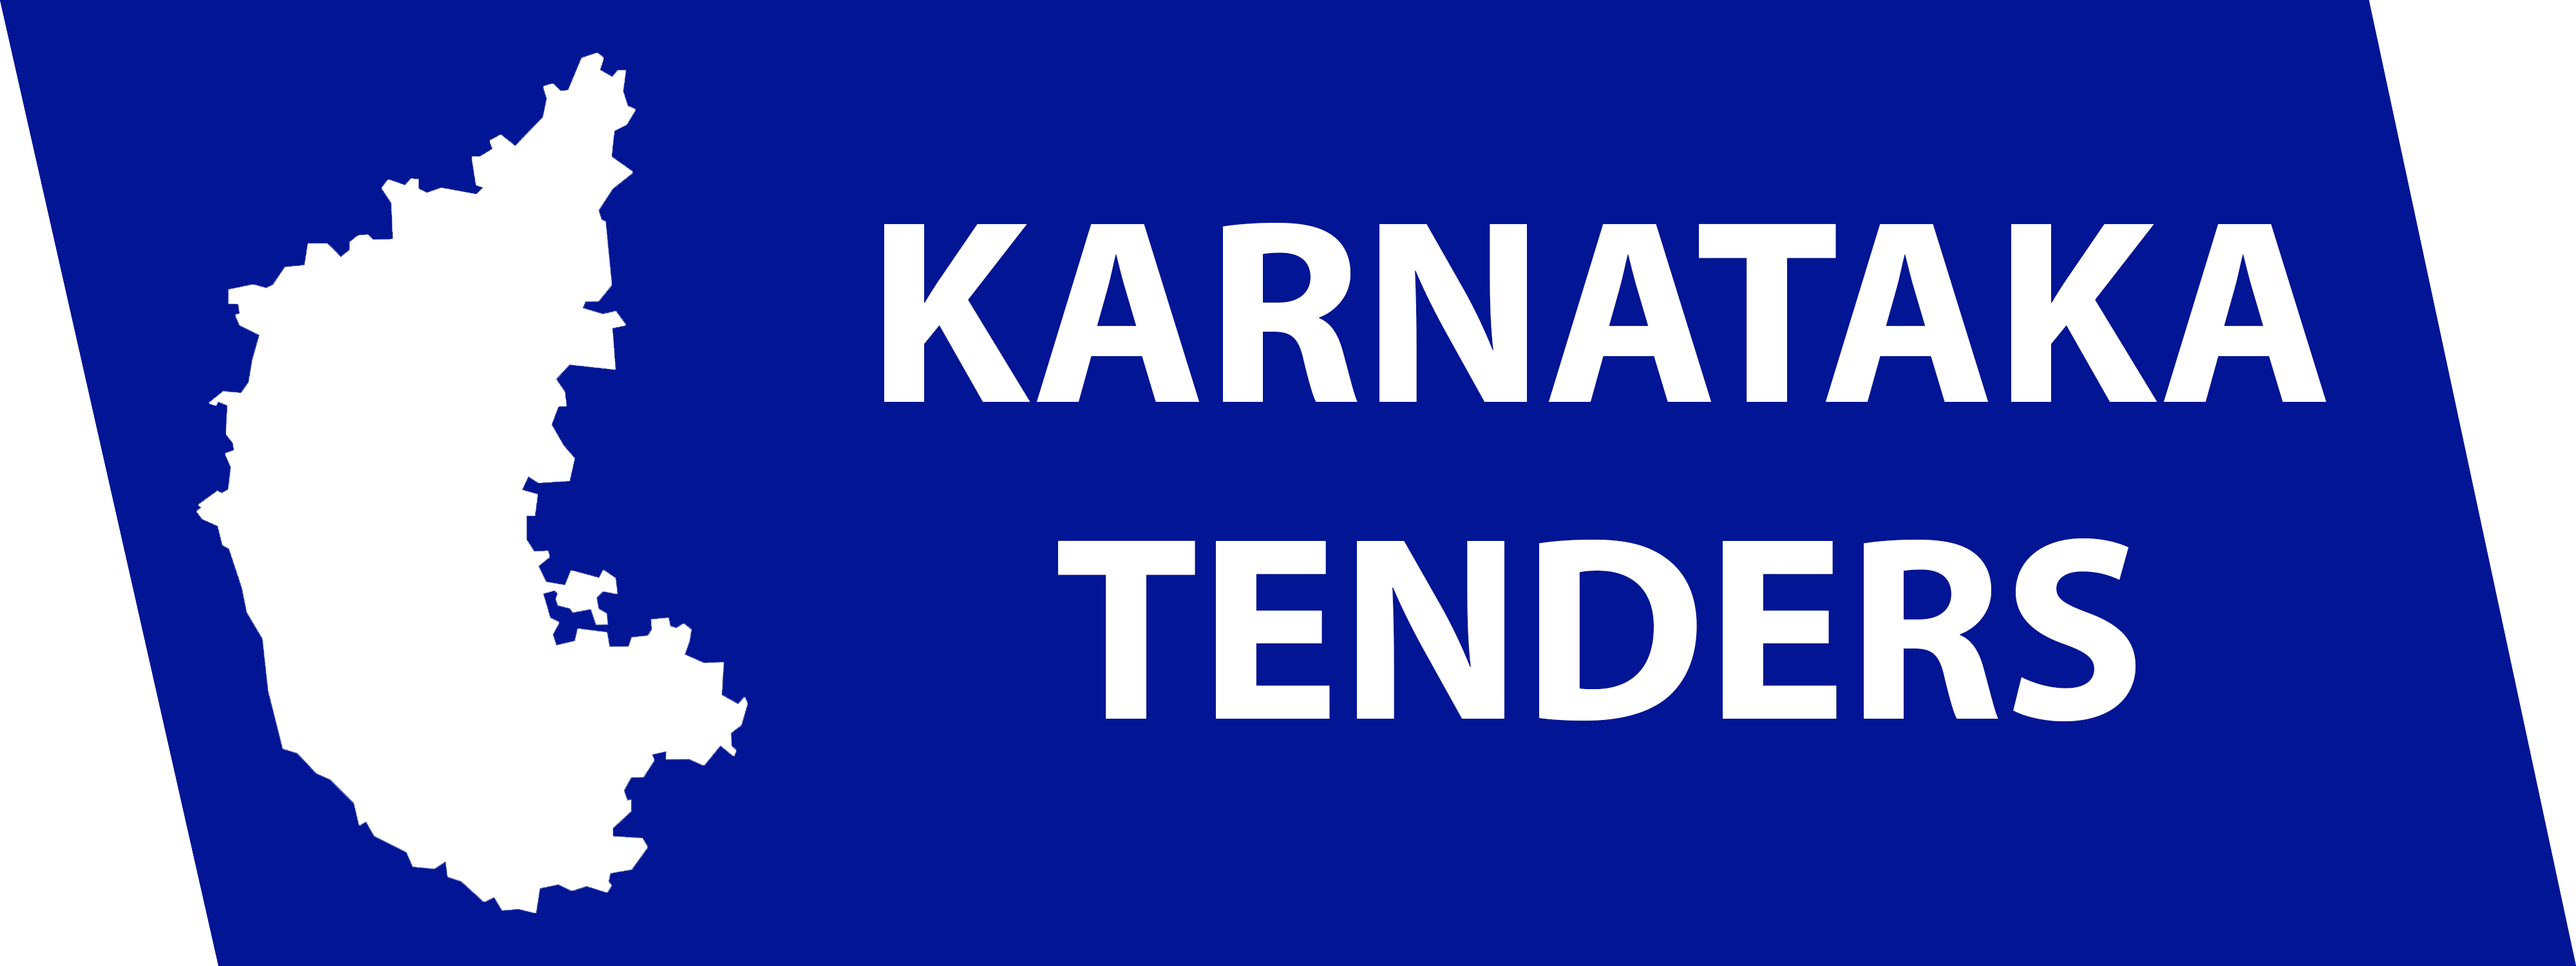 Karnataka Tenders